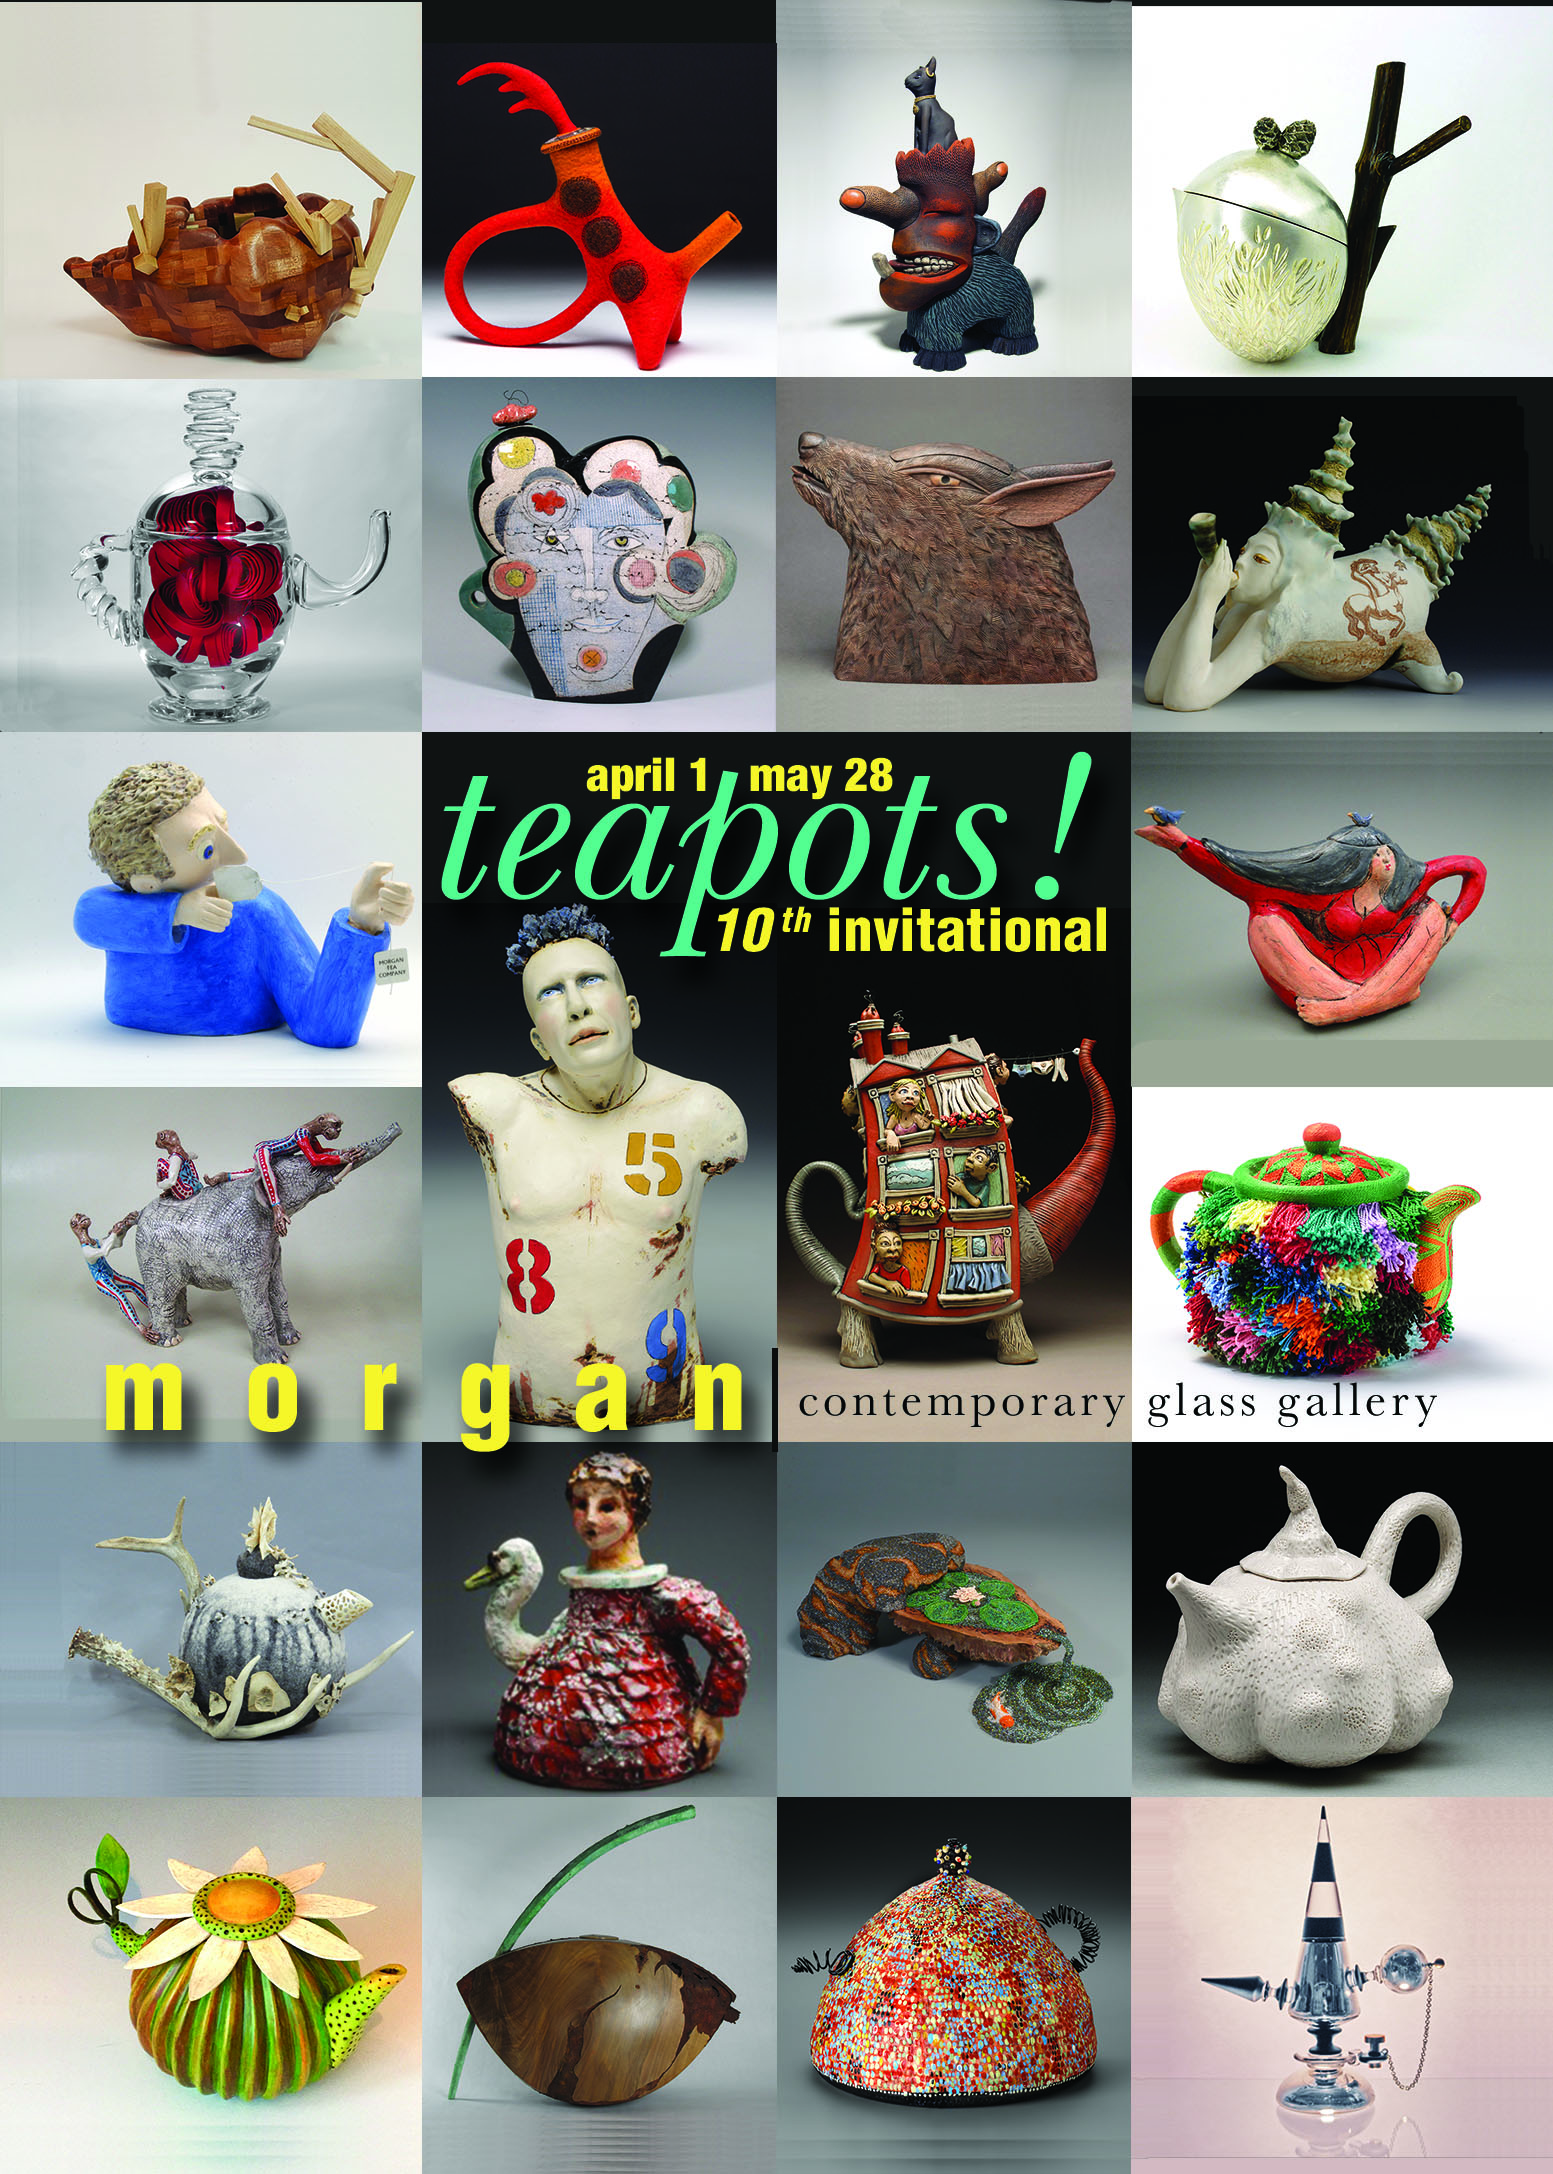 Visit Morgan Contemporary Glass Gallery's teapots! 10th invitational exhibition.